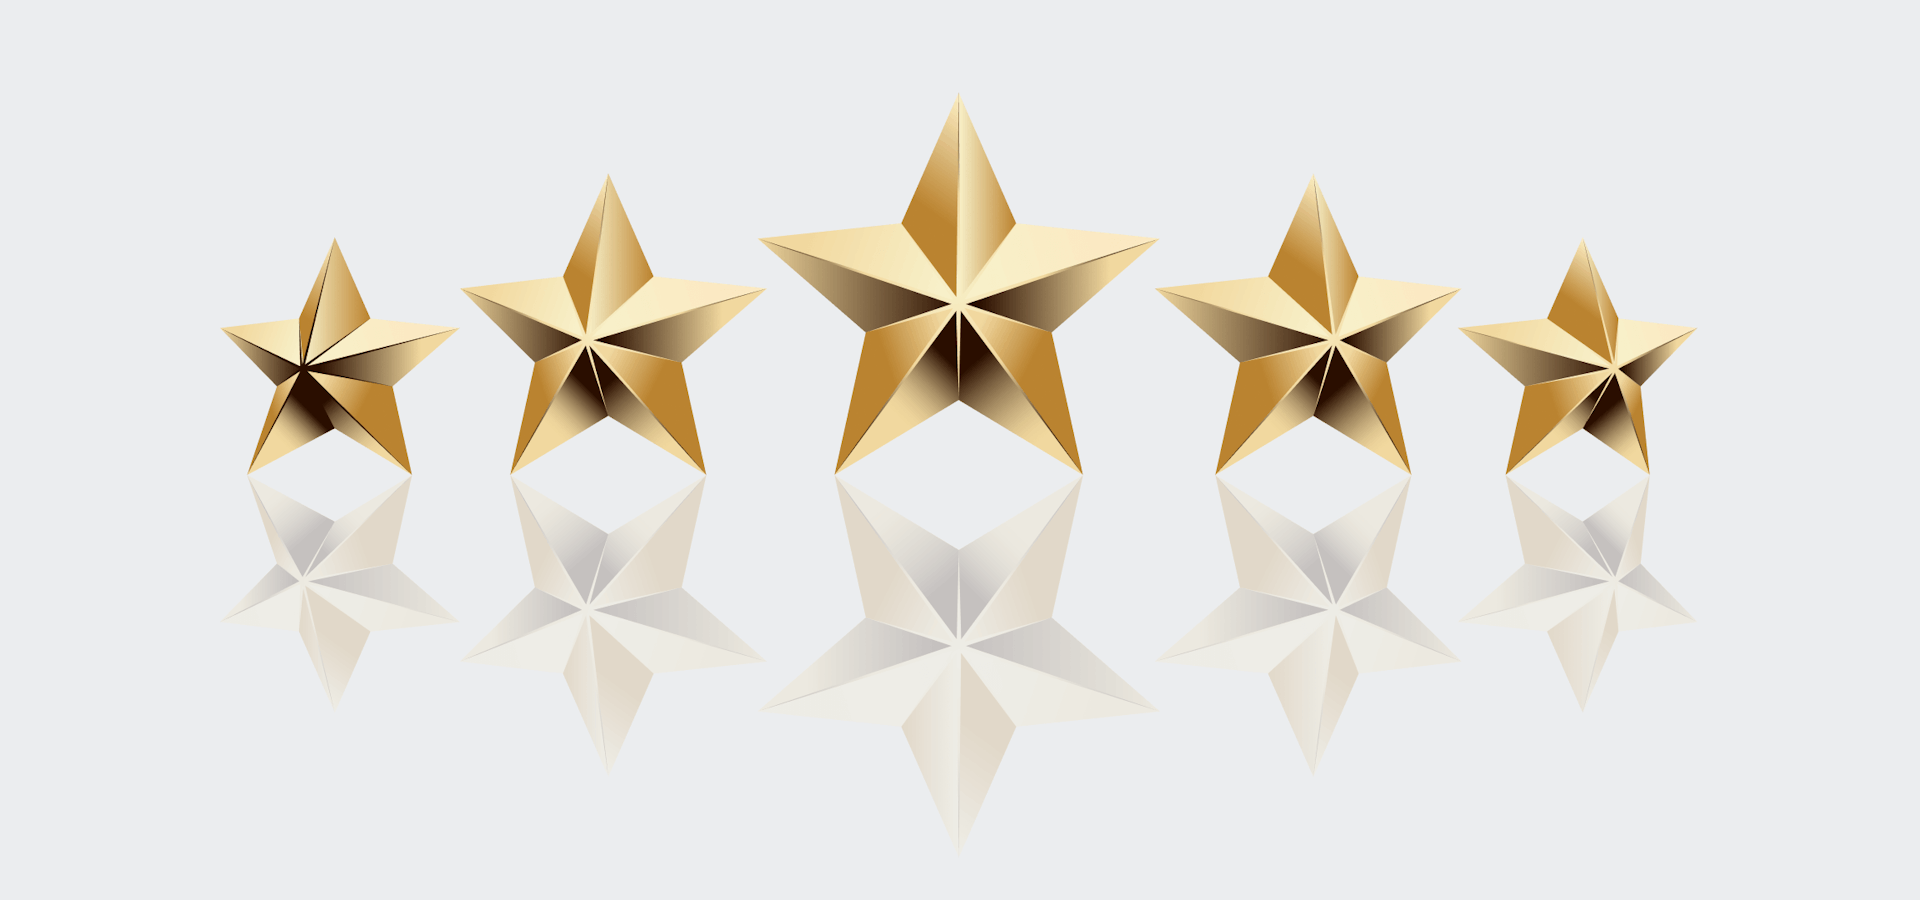 Five golden stars